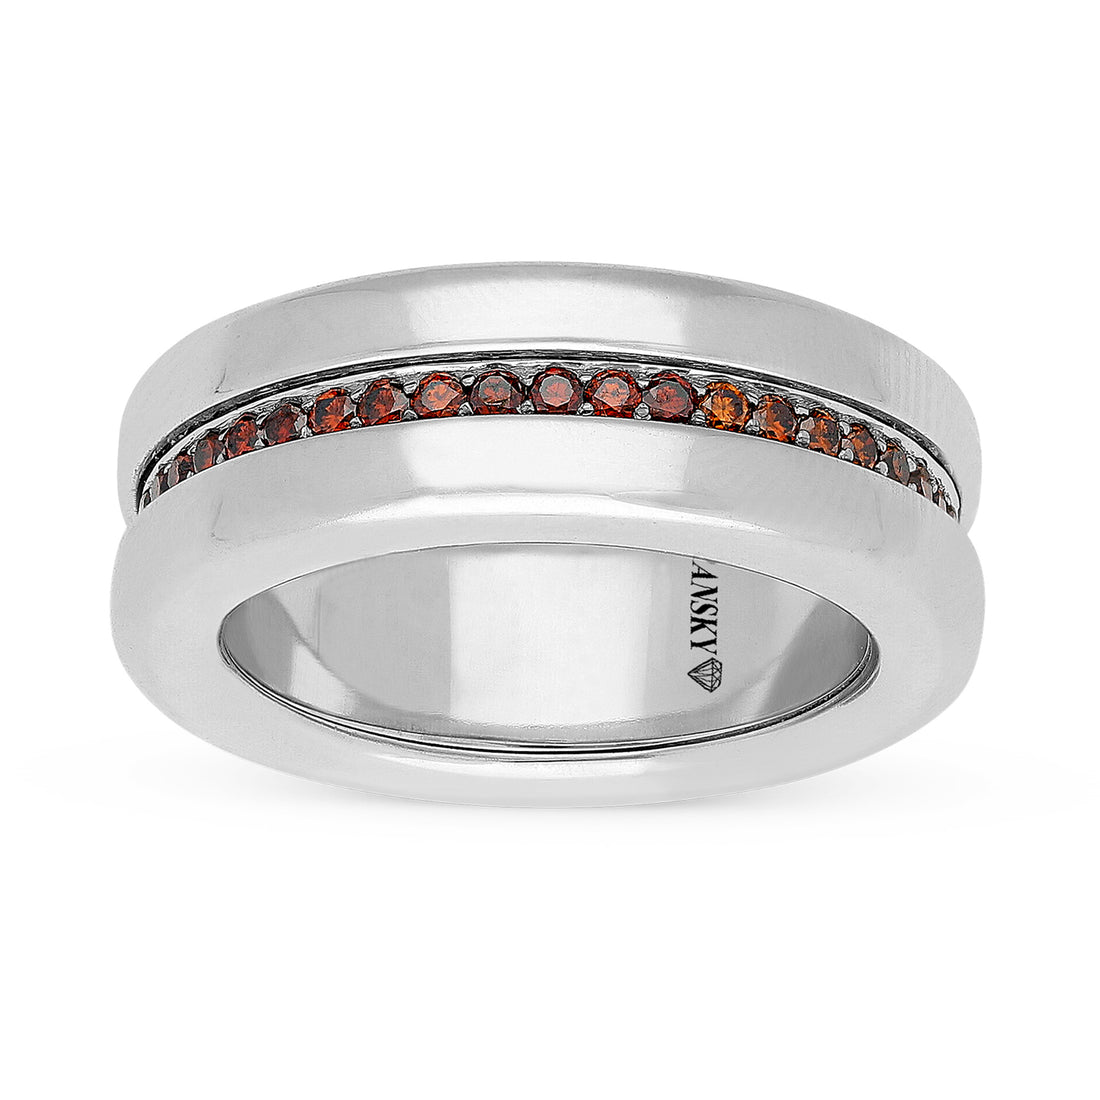 Spinning Wedding Band Ring in Orange and White Diamonds